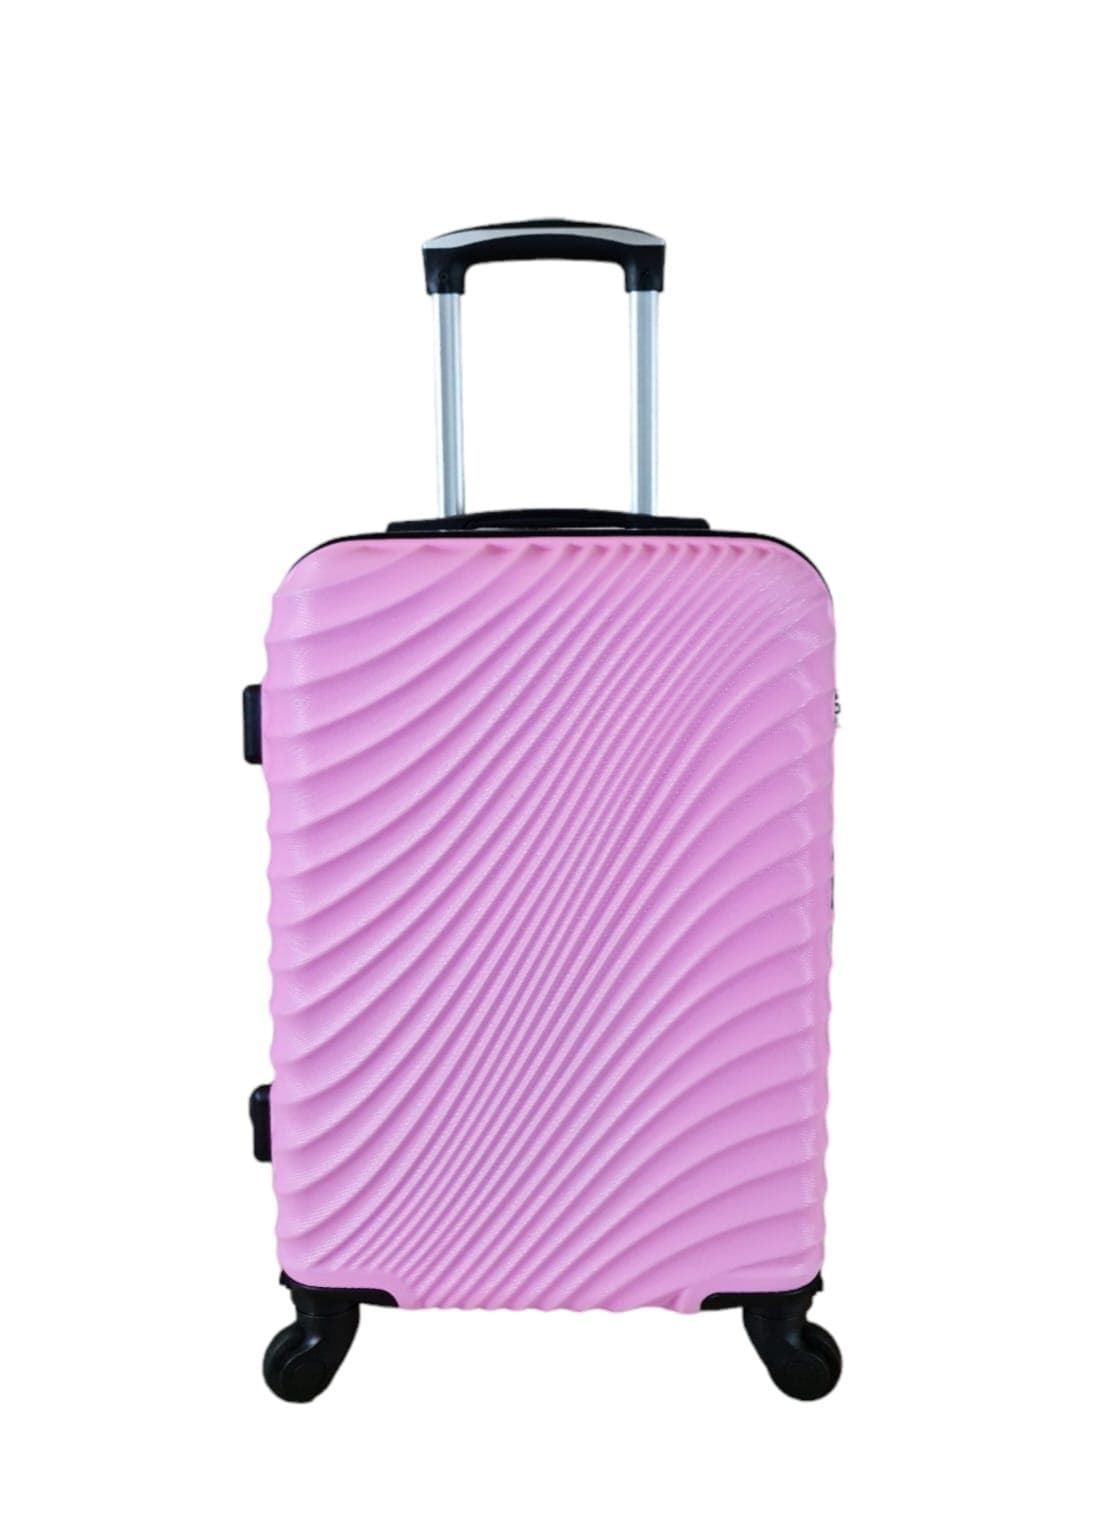 Maleta de Viaje Tamaño Cabina VIP Peso 10 kilos Material ABS Barata Medidas 55x40x20 color Rosa Barbie - Imagen 1